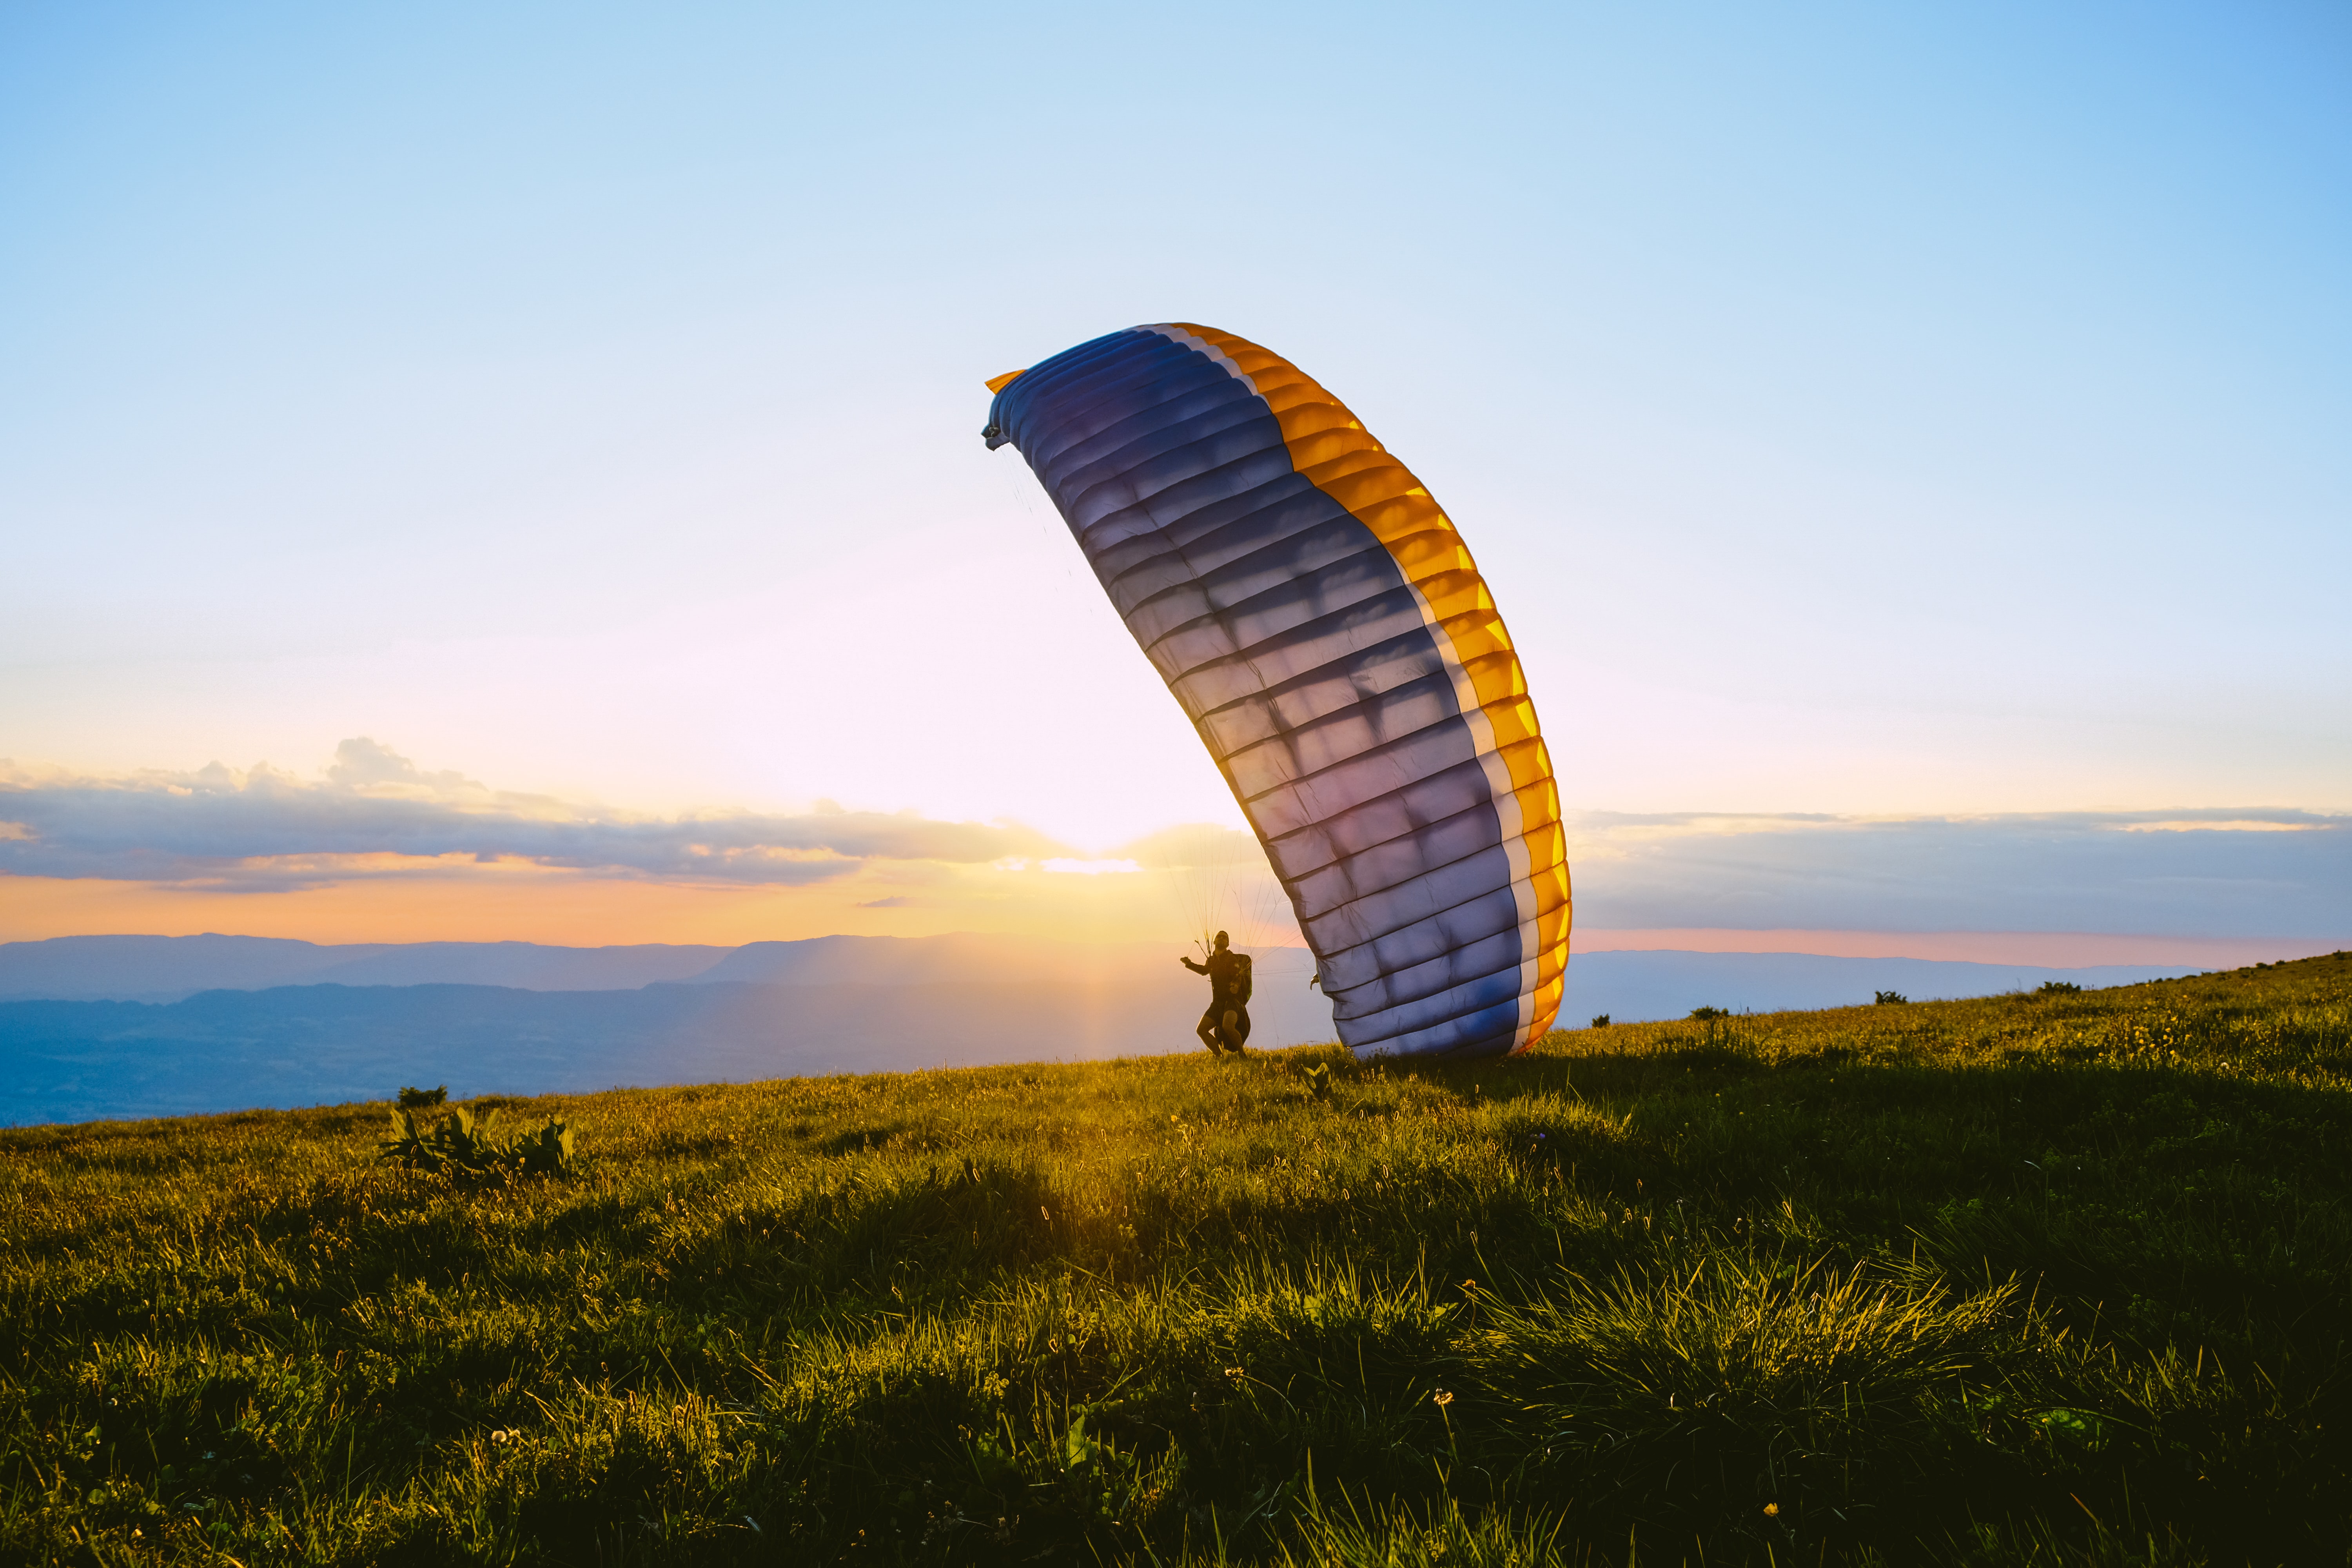 bir billing paragliding in sunny day